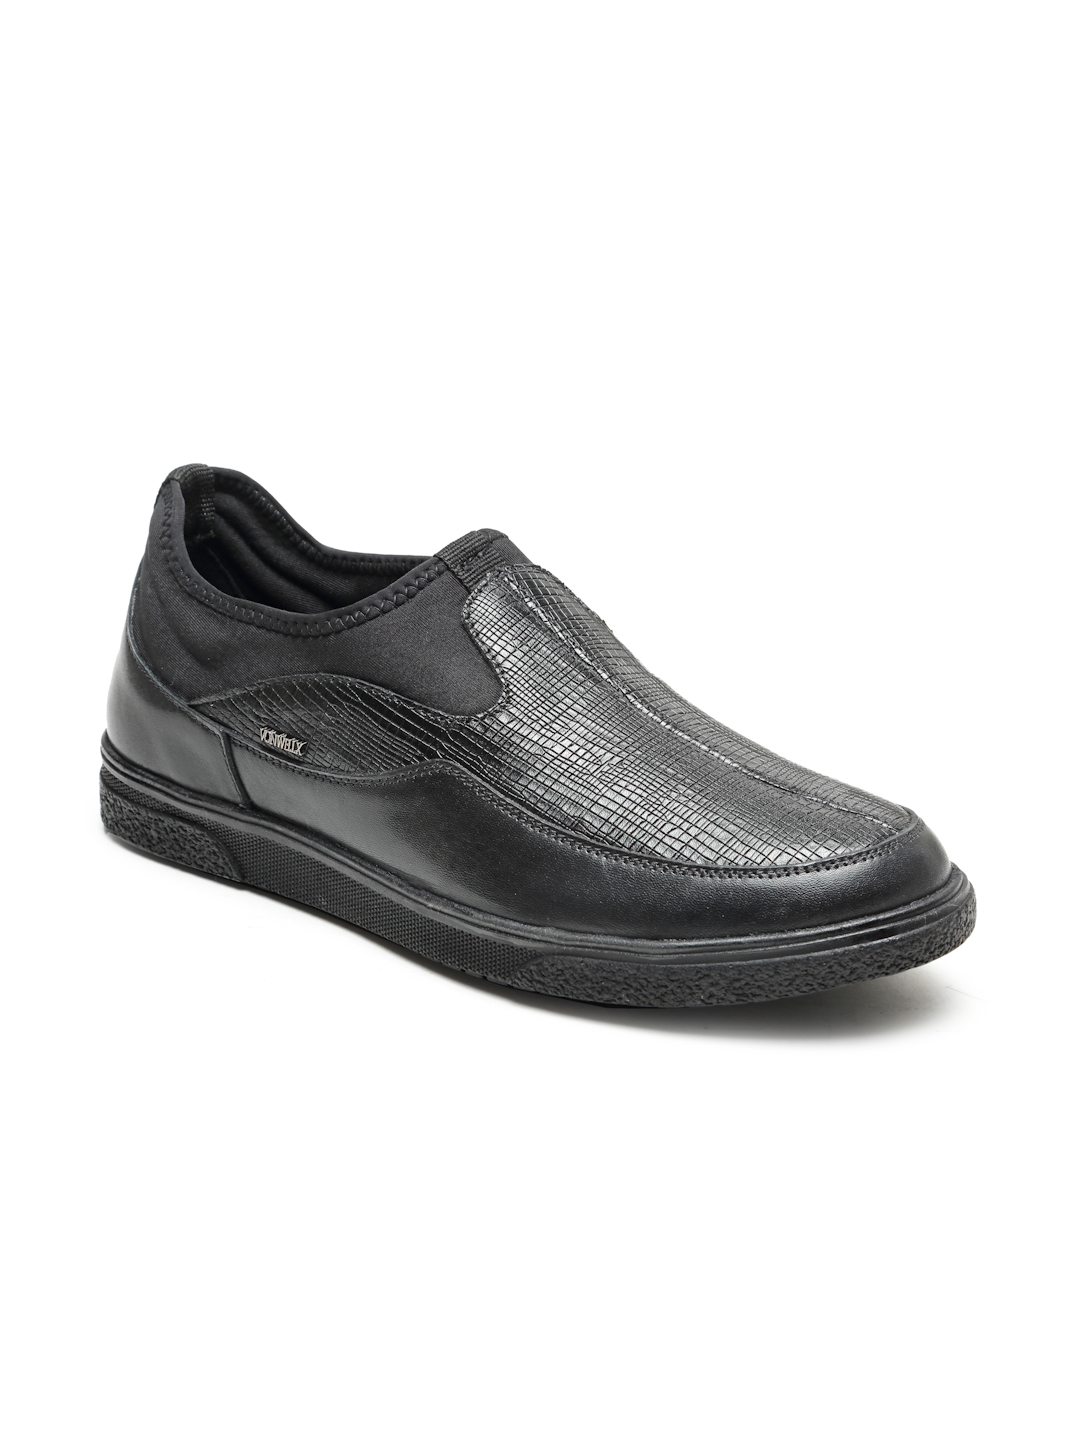 Buy VON WELLX GERMANY comfort men's black casual loafers EVERETT In Delhi